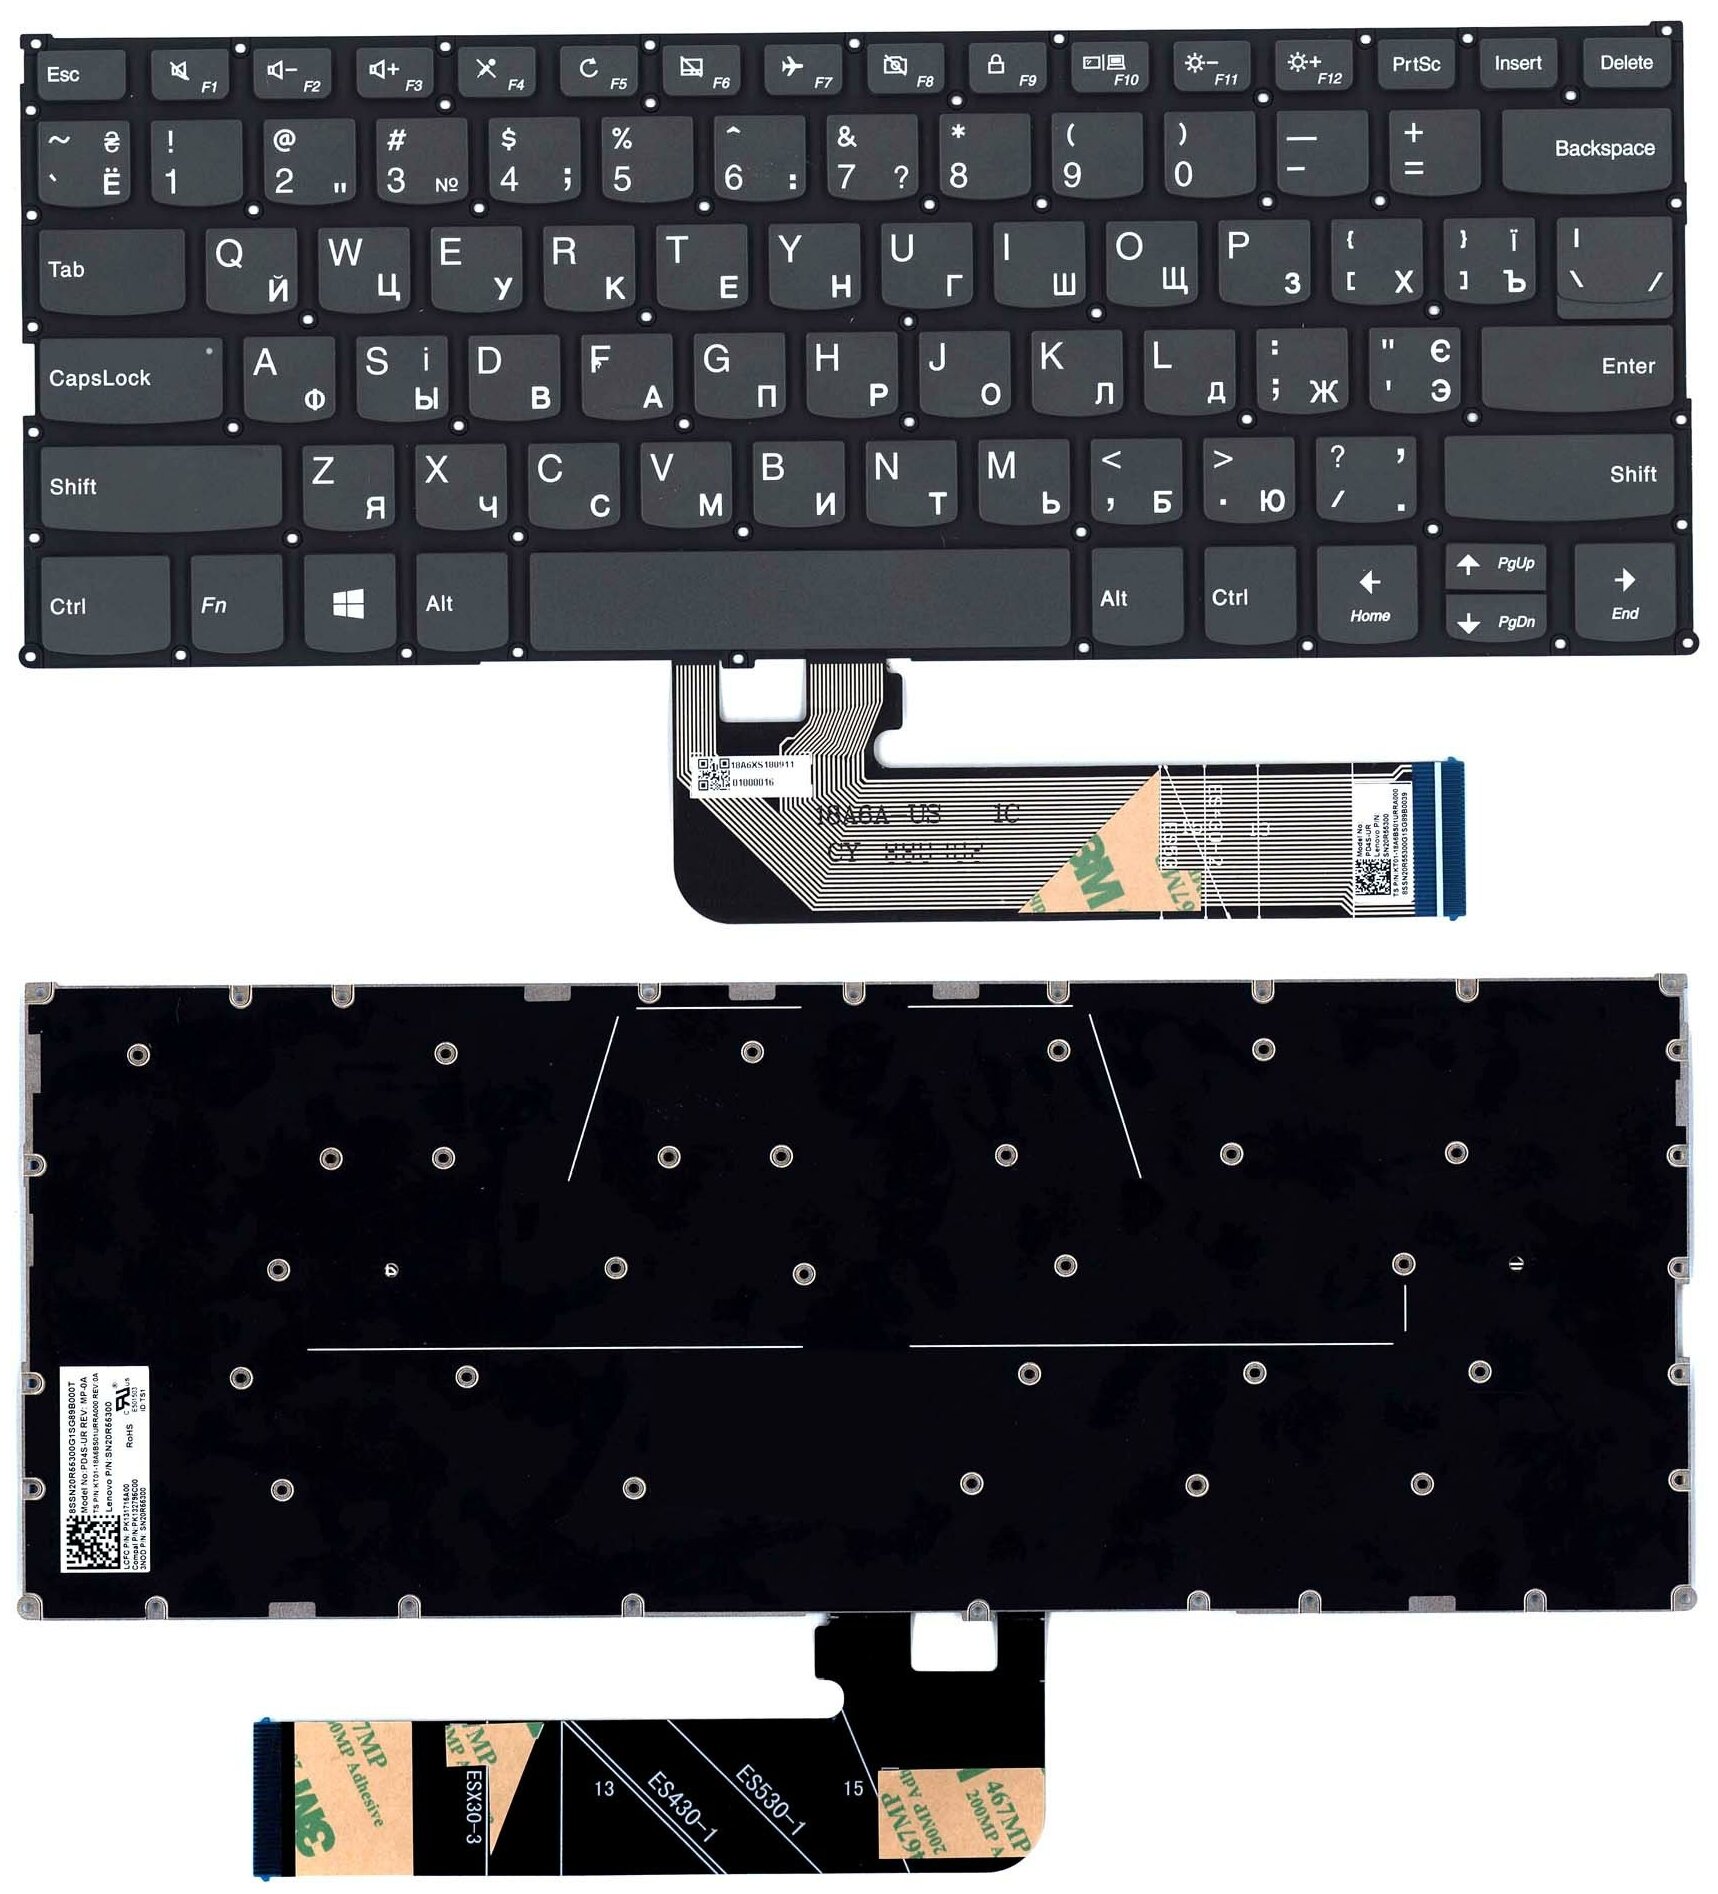 Клавиатура для ноутбука Lenovo Ideapad 530S-14ARR черная